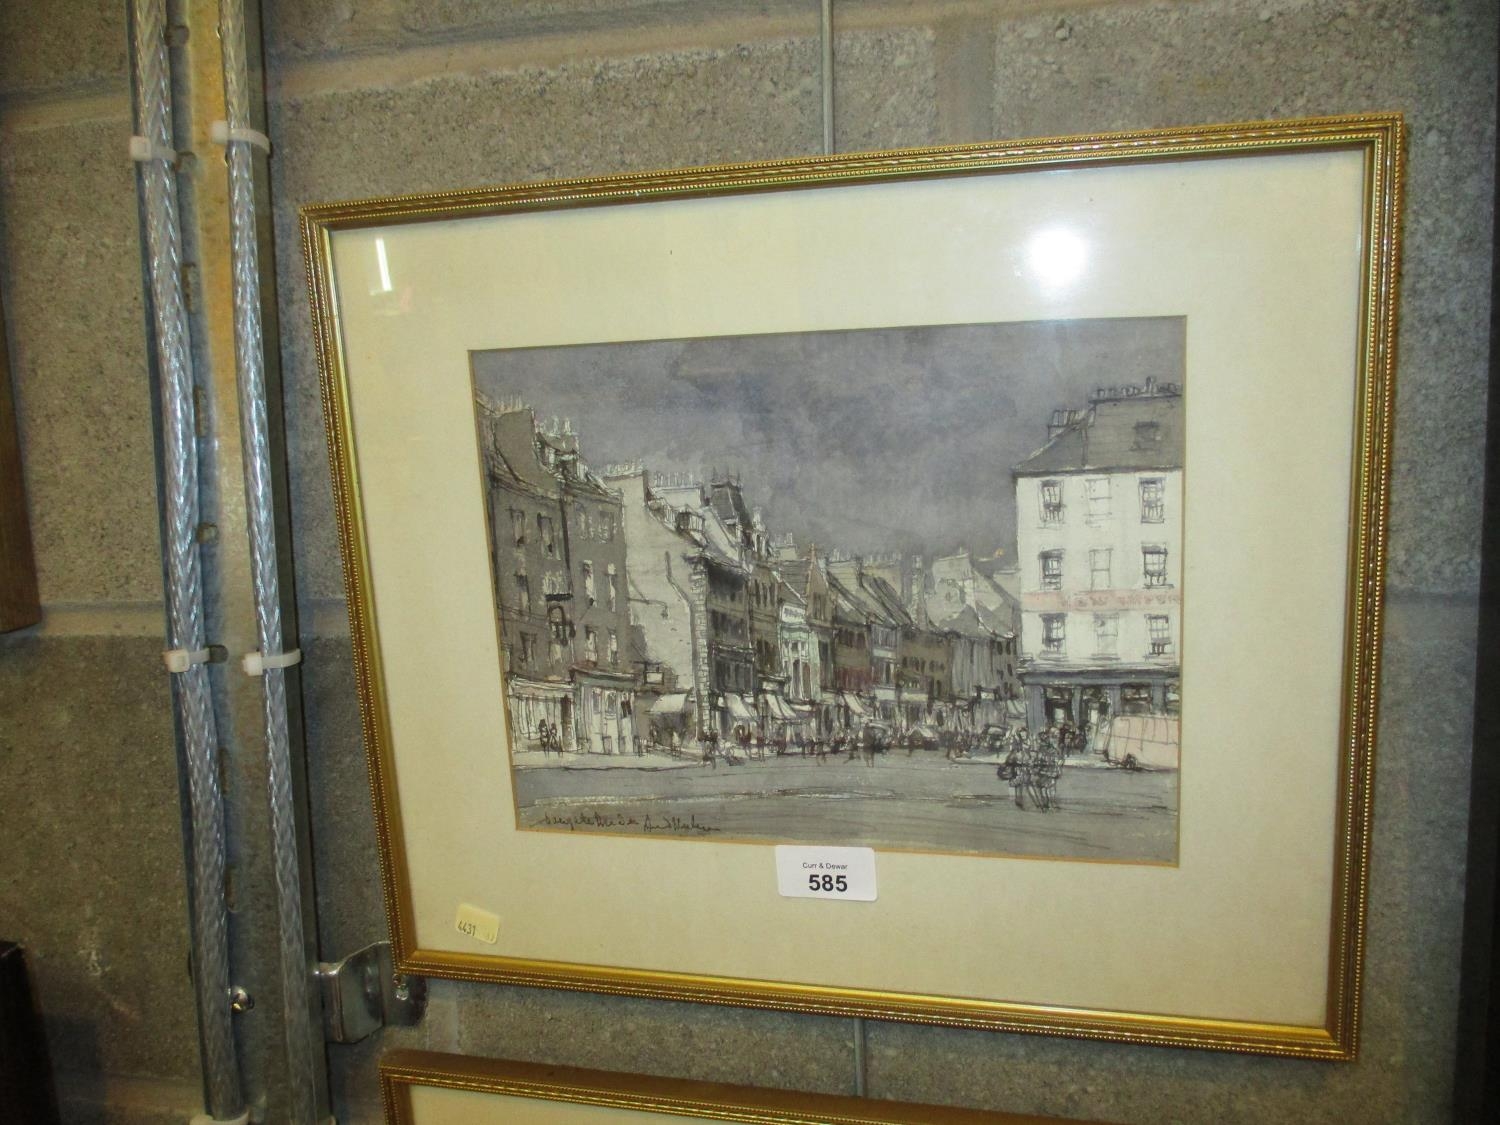 Andrew Neilson, Watercolour, Overgate Dundee, 19x25cm